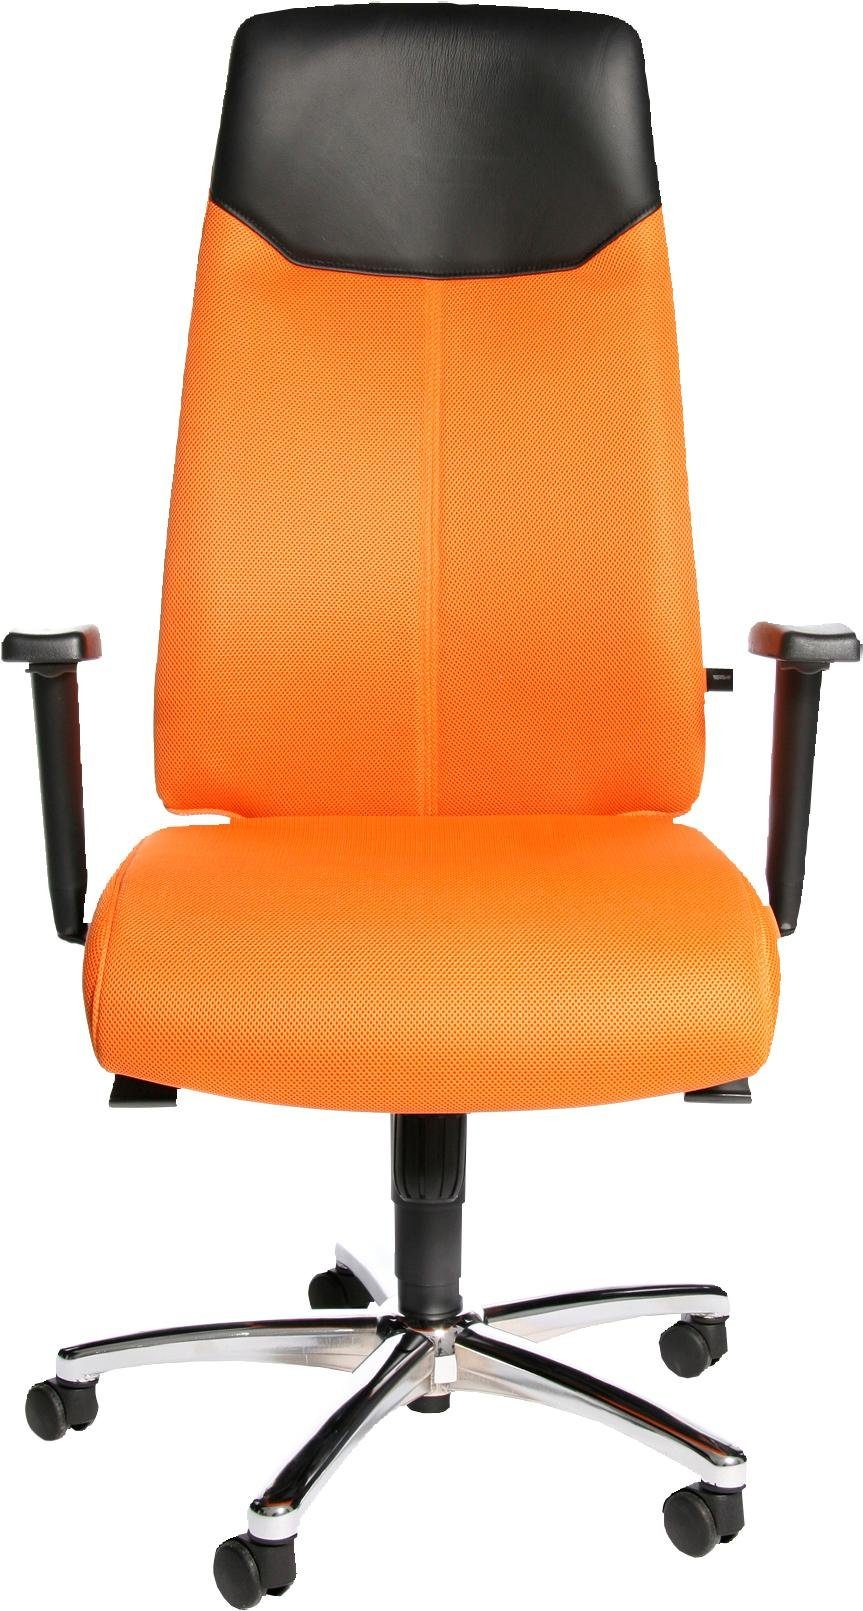 Chefsessel High TOPSTAR Sit up orange